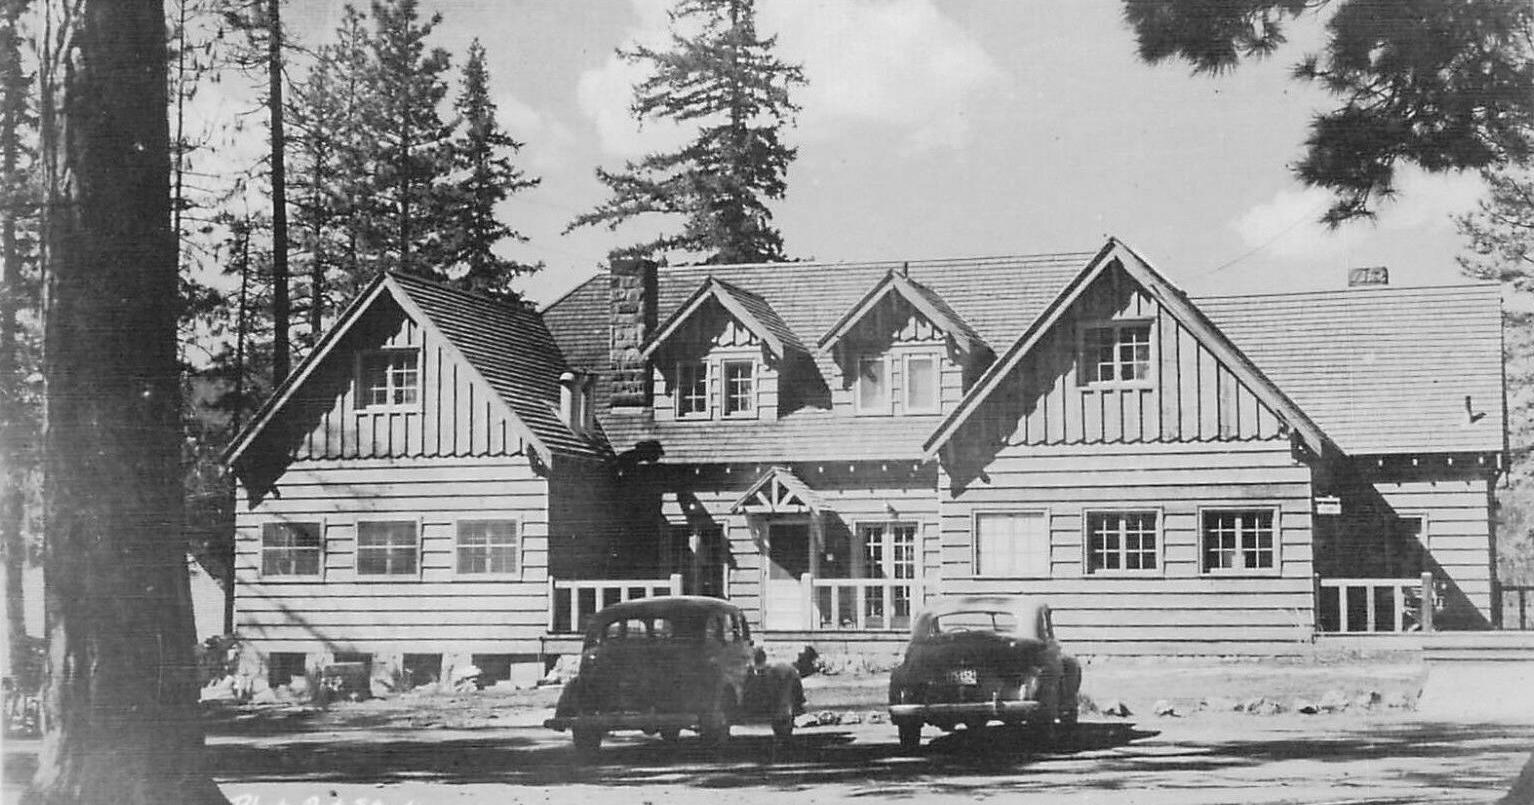 CENTRAL OREGON HISTORY: Suttle Lake Resort was a pioneering recreational enterprise